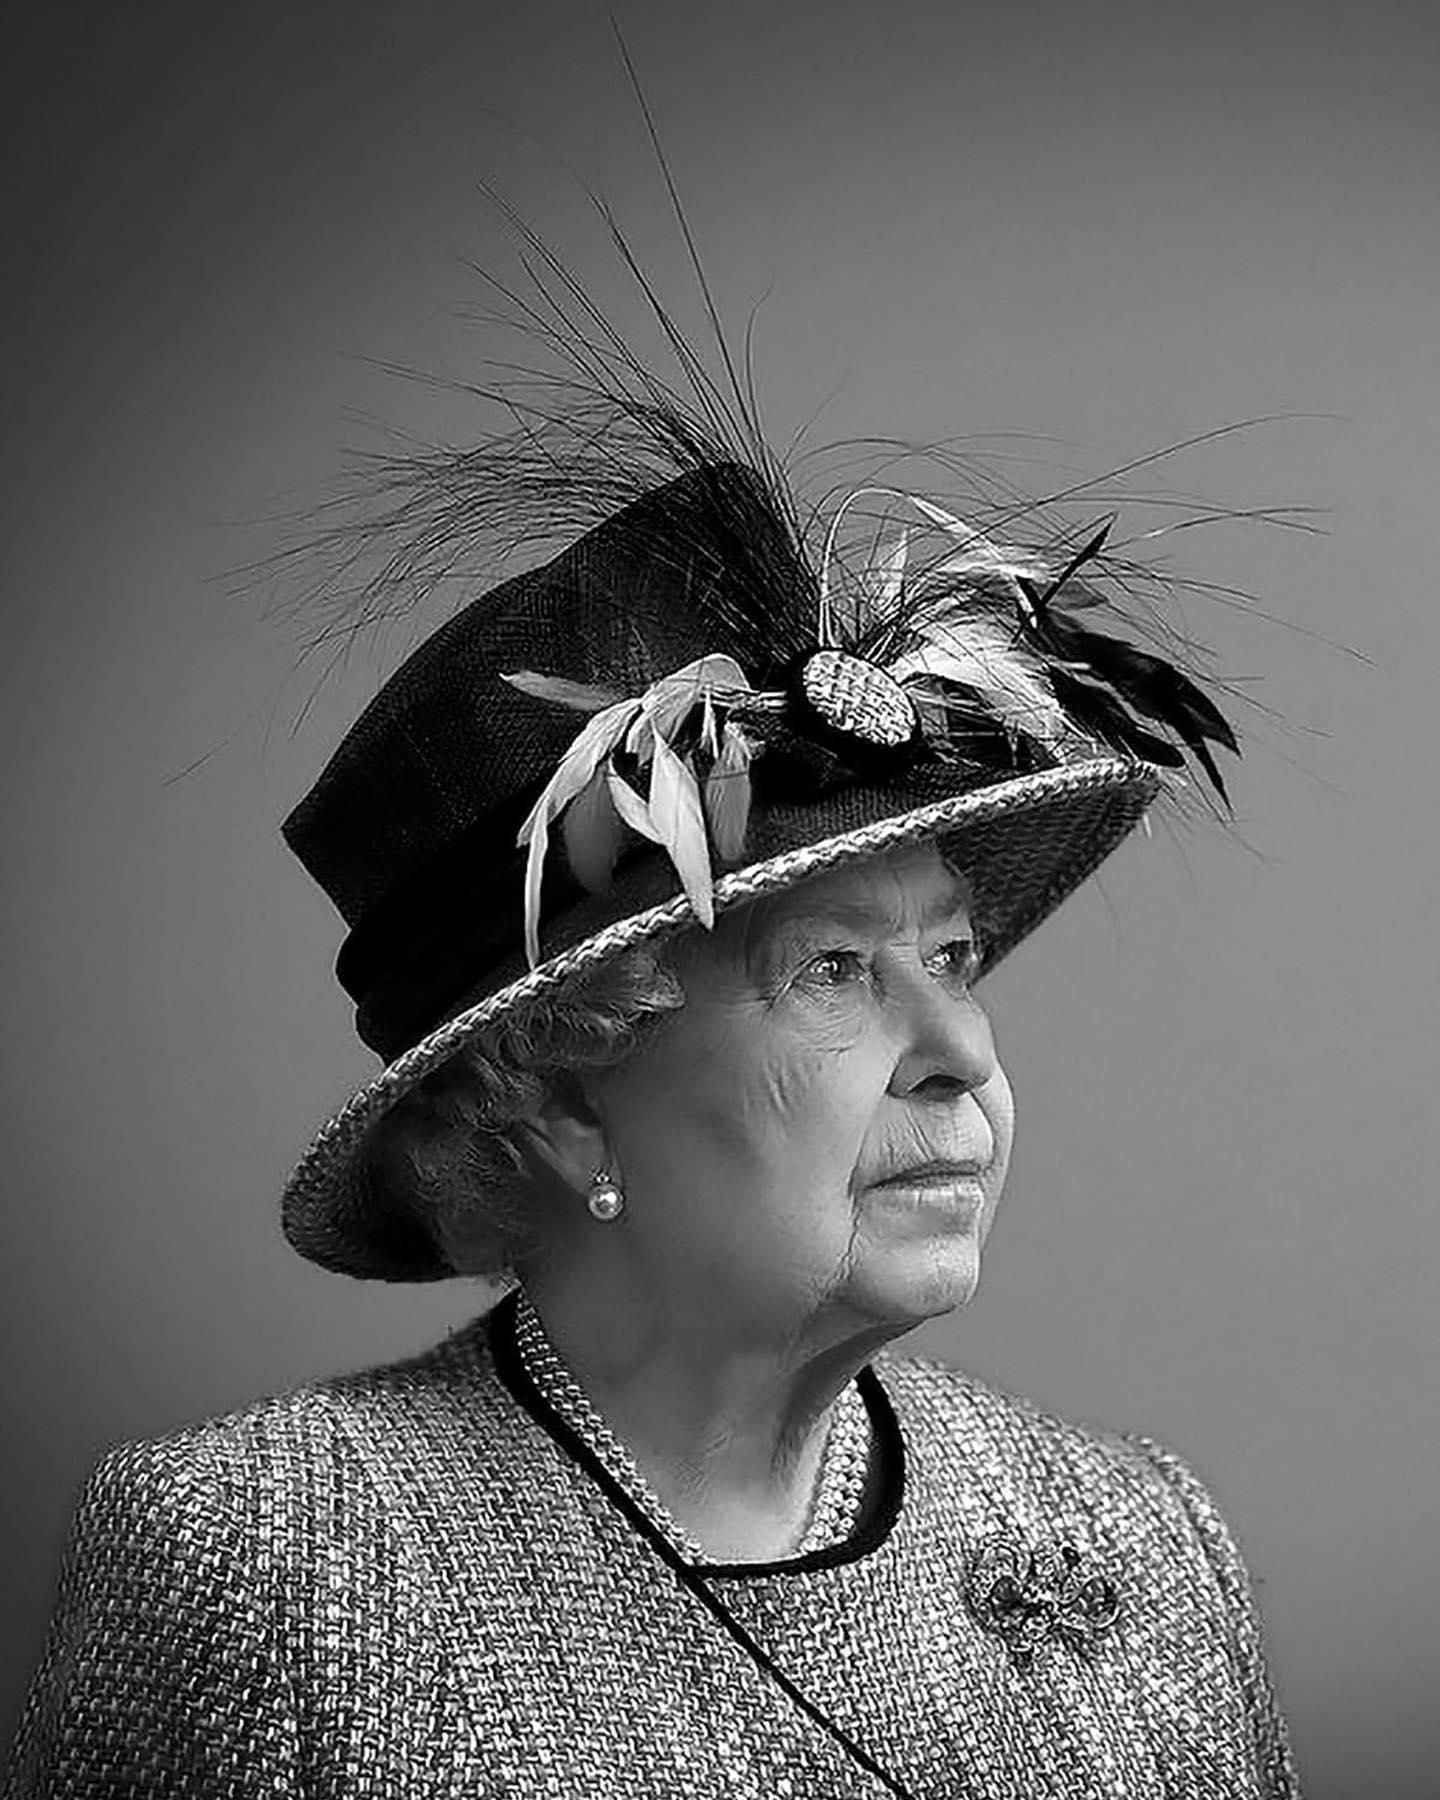 Virgin Atlantic - Her Majesty Queen Elizabeth II was an extraordinary figurehead, flying the flag fo